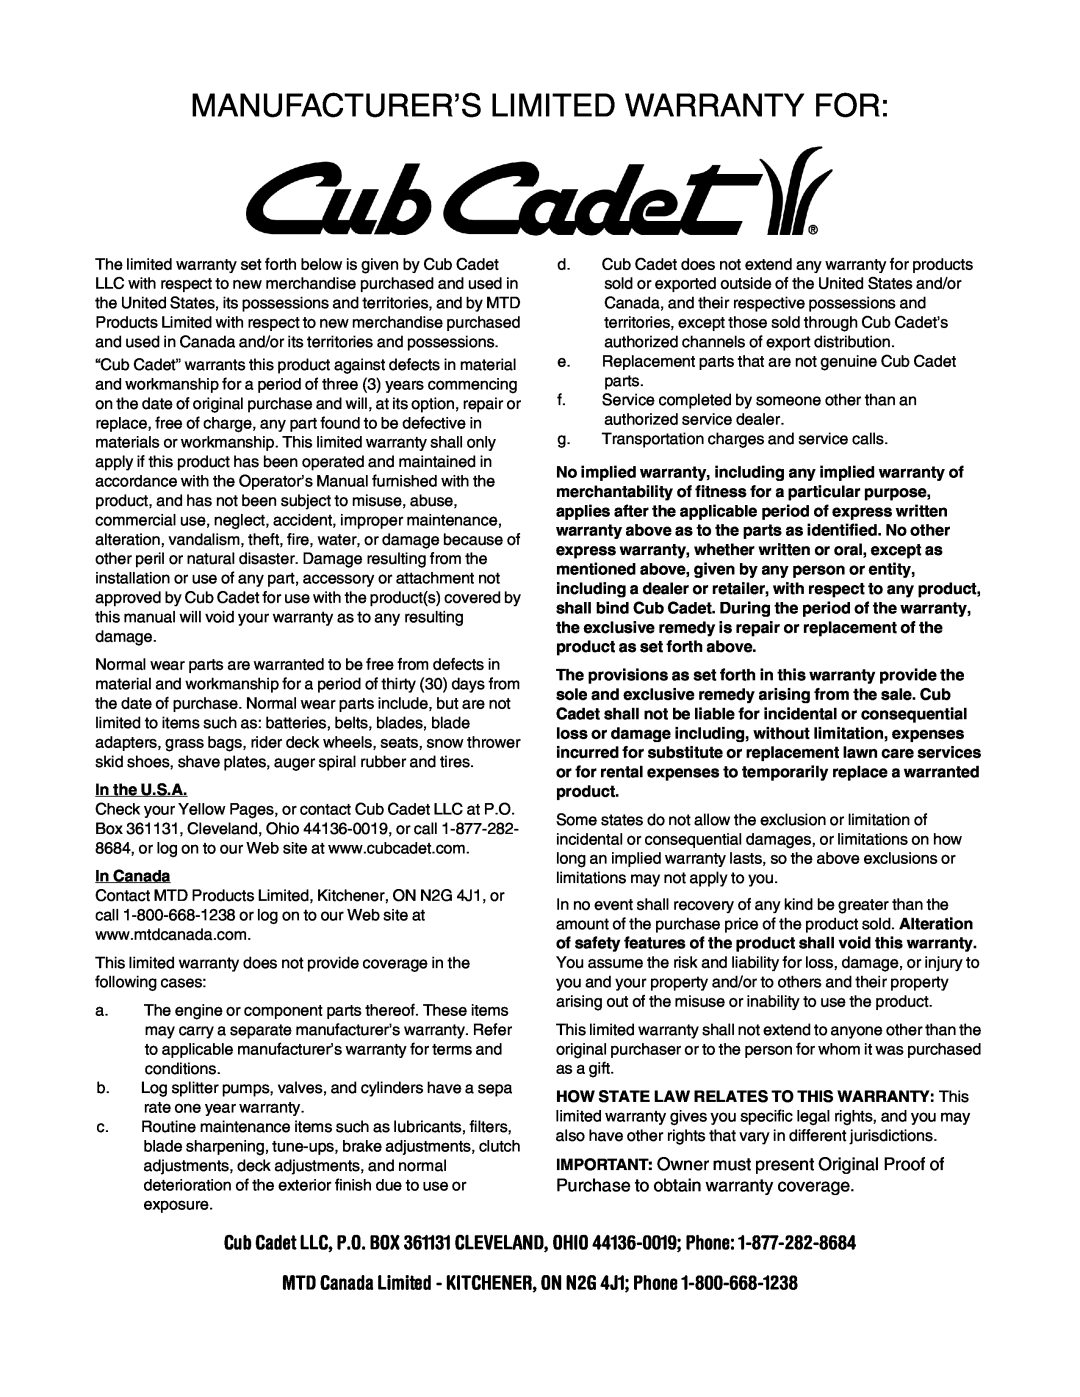 Cub Cadet 730 STE manual Manufacturer’S Limited Warranty For, MTD Canada Limited - KITCHENER, ON N2G 4J1 Phone 